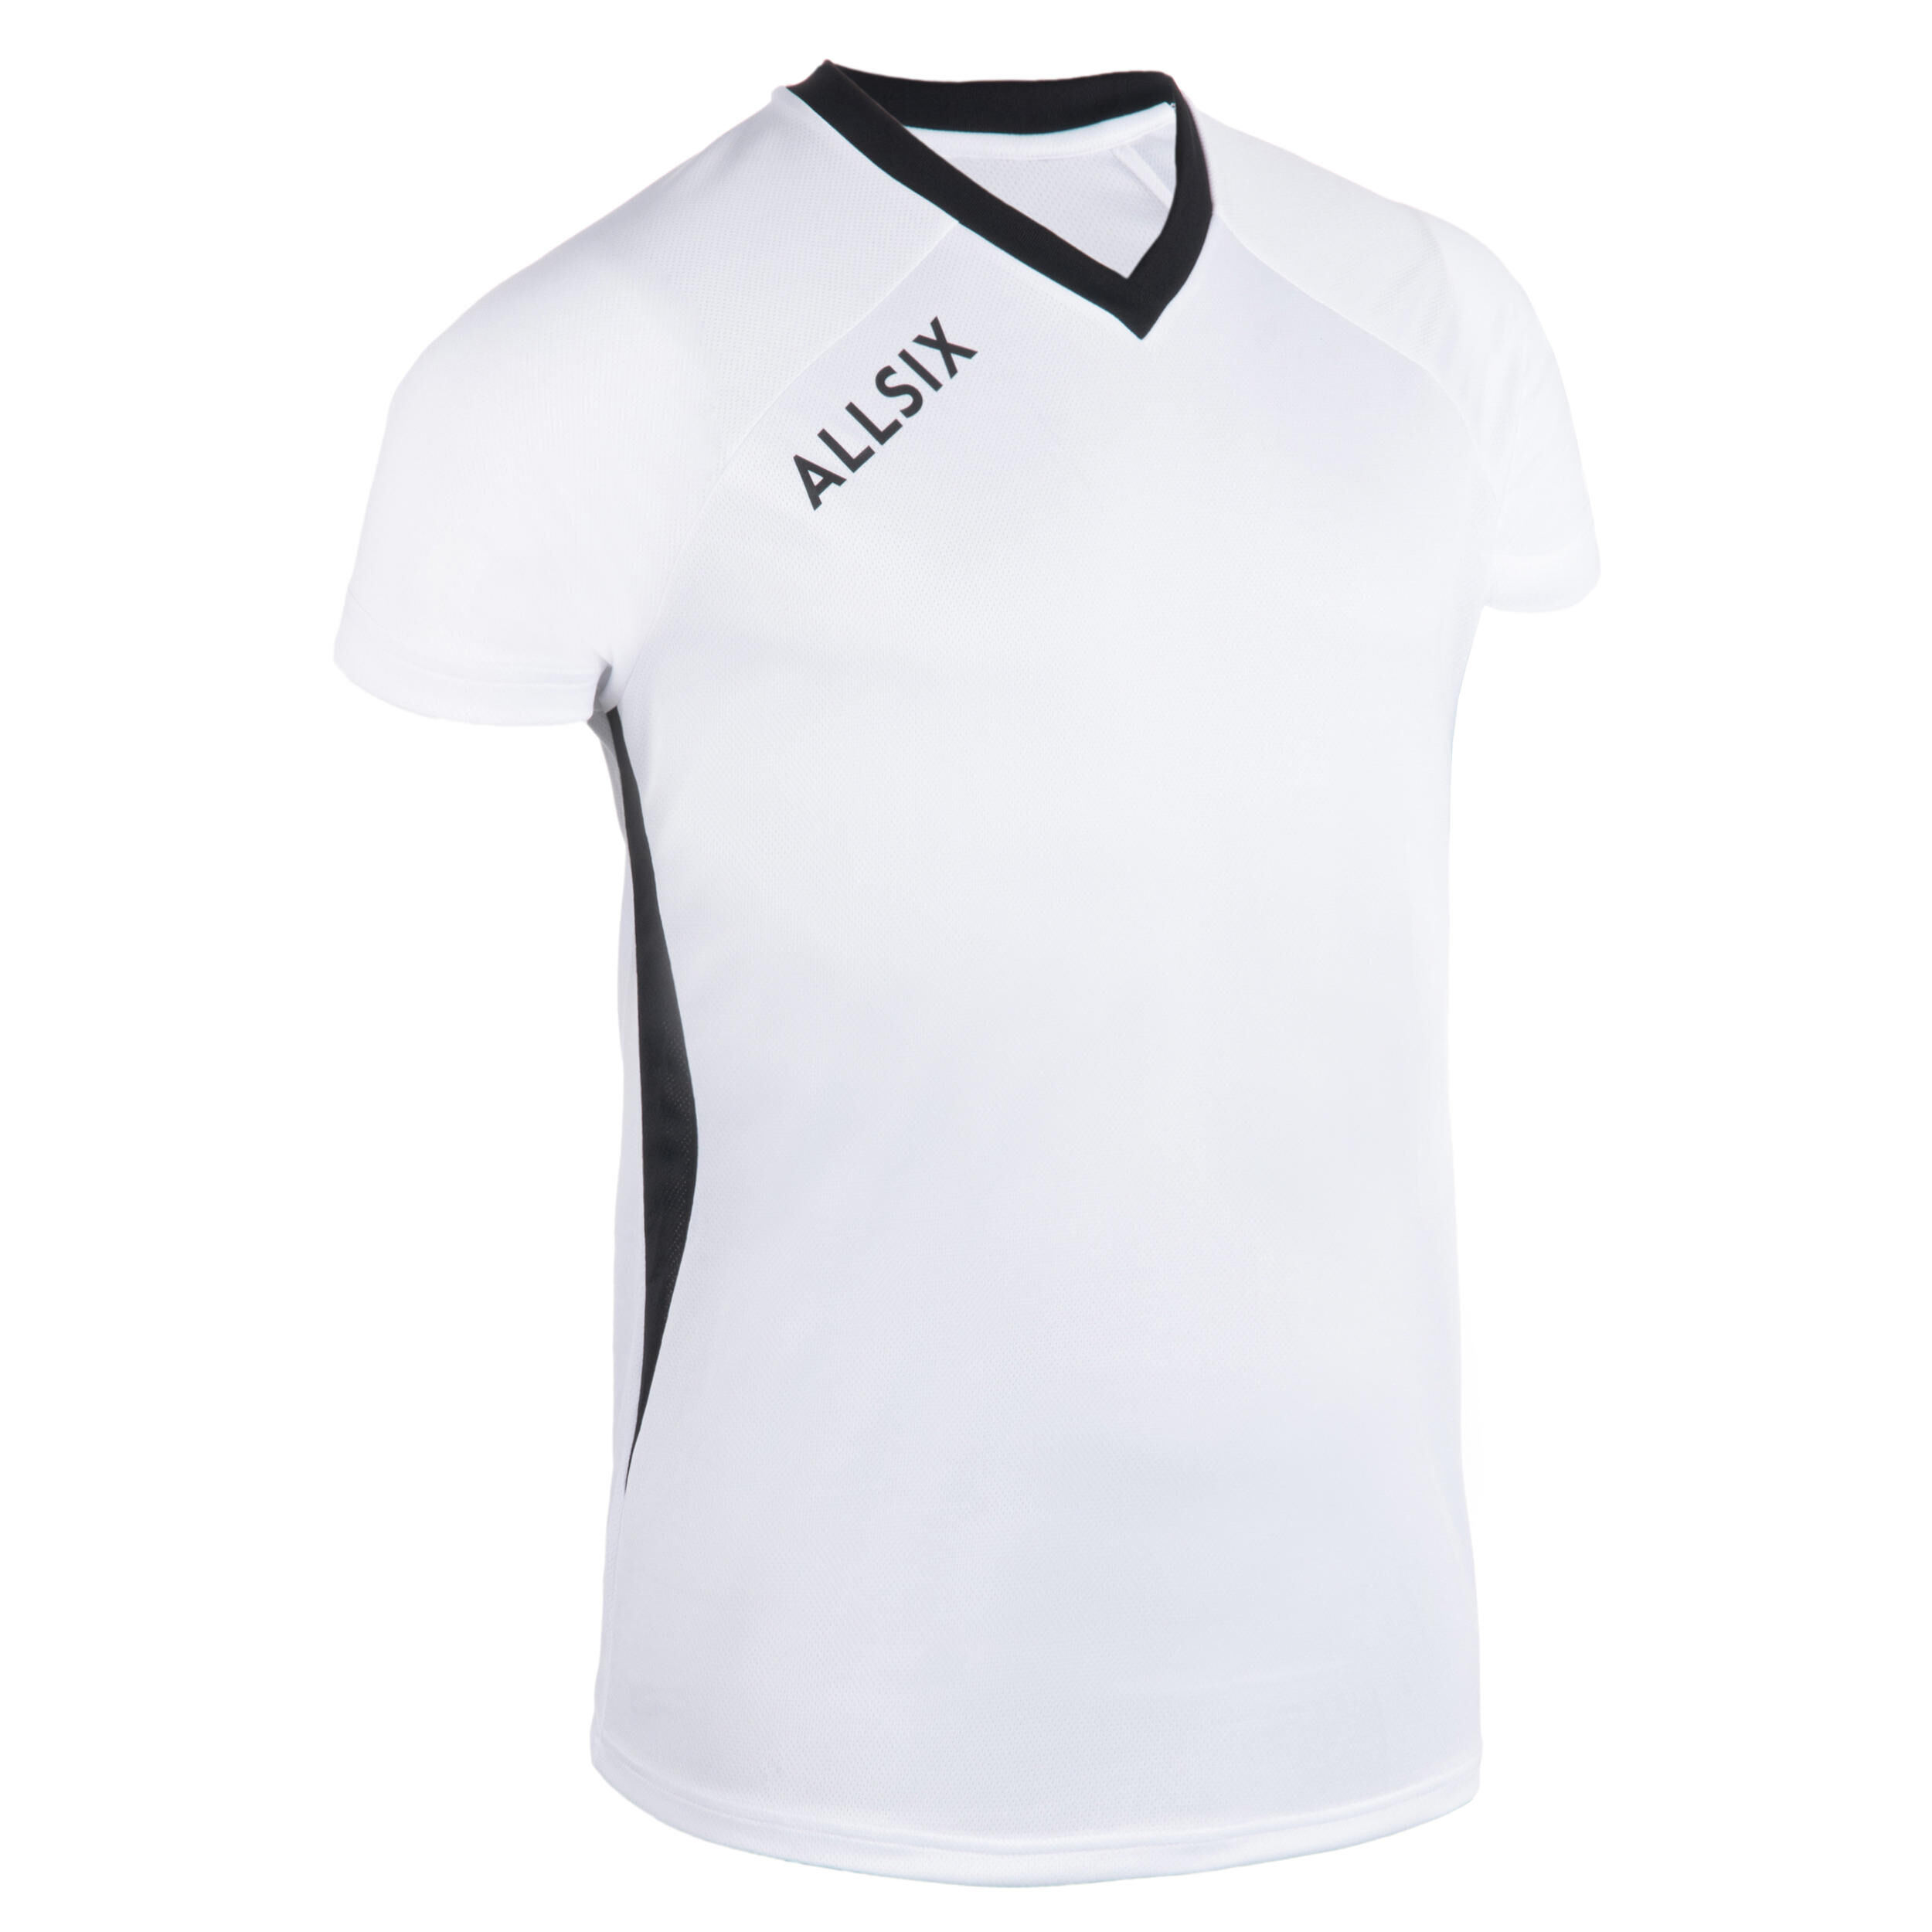 ALLSIX V100 Volleyball Jersey - White